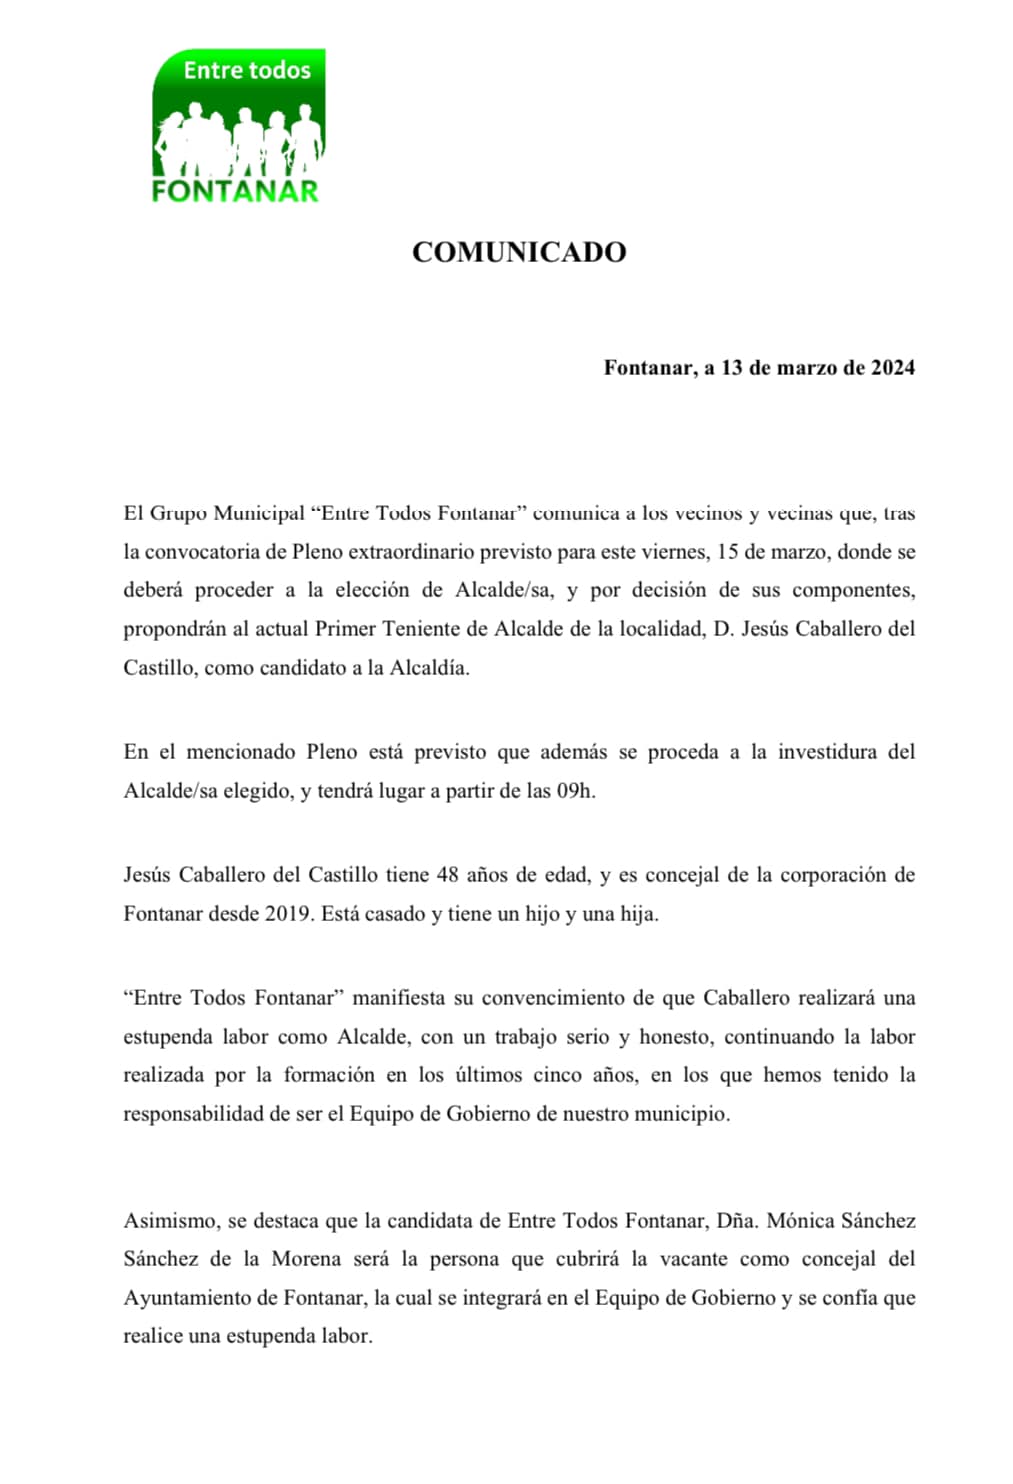 Elección de Jesús Caballero del Castillo como Alcalde de Fontanar